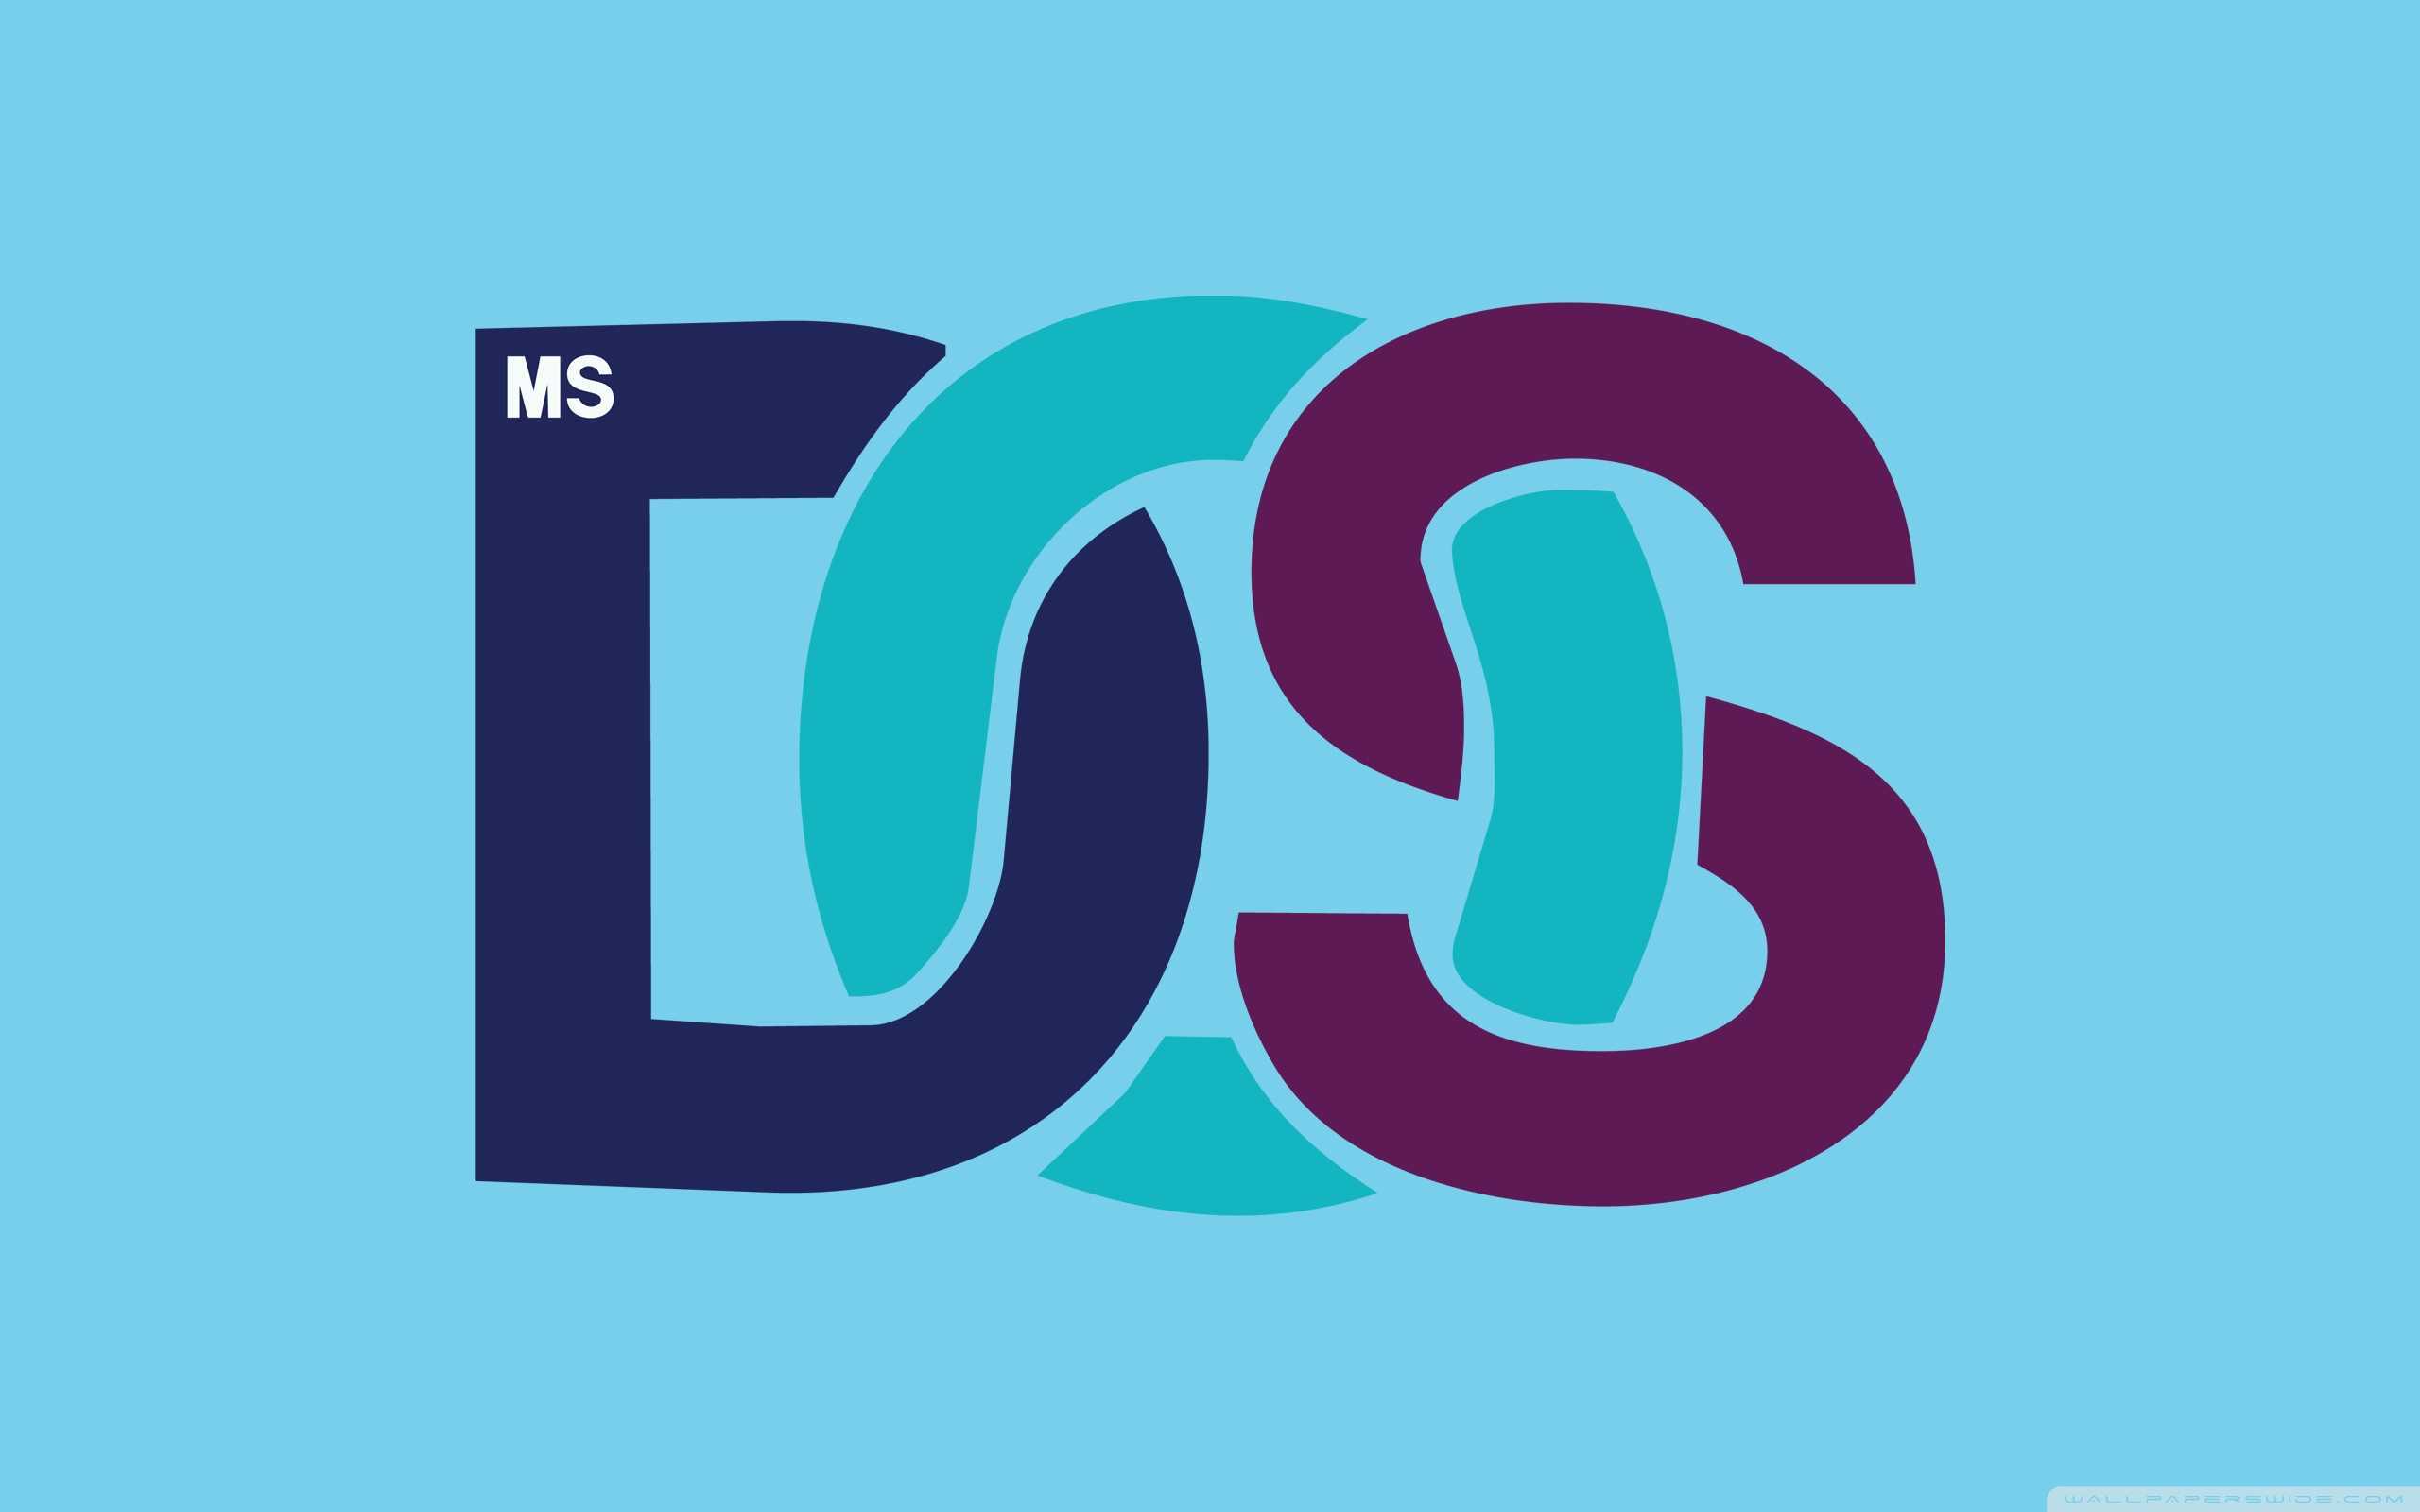 Q мс. Значок MS dos. Операционной системы MS-dos. Операционные системы MS dos. МС дос Операционная система.